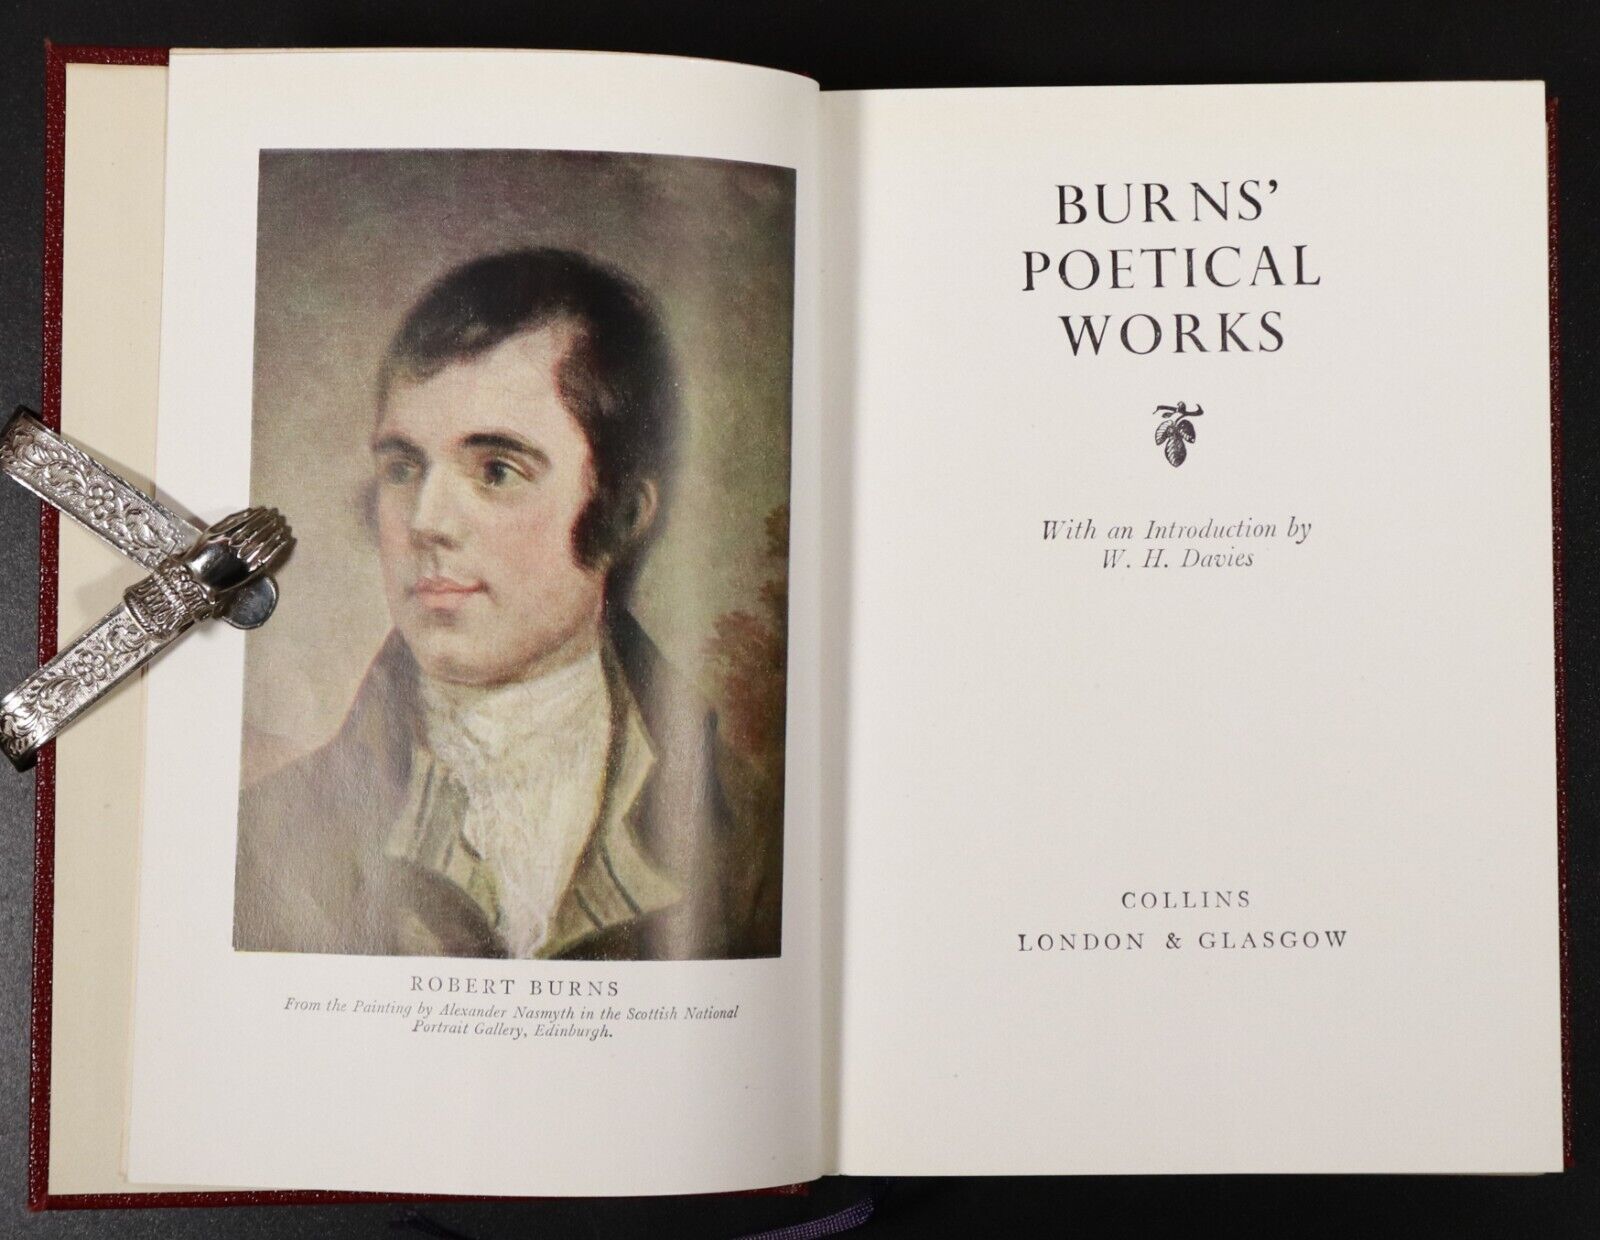 c1950 Burns' Poetical Works by Robert Burns Scottish Poetry Book W.H. Davies - 0